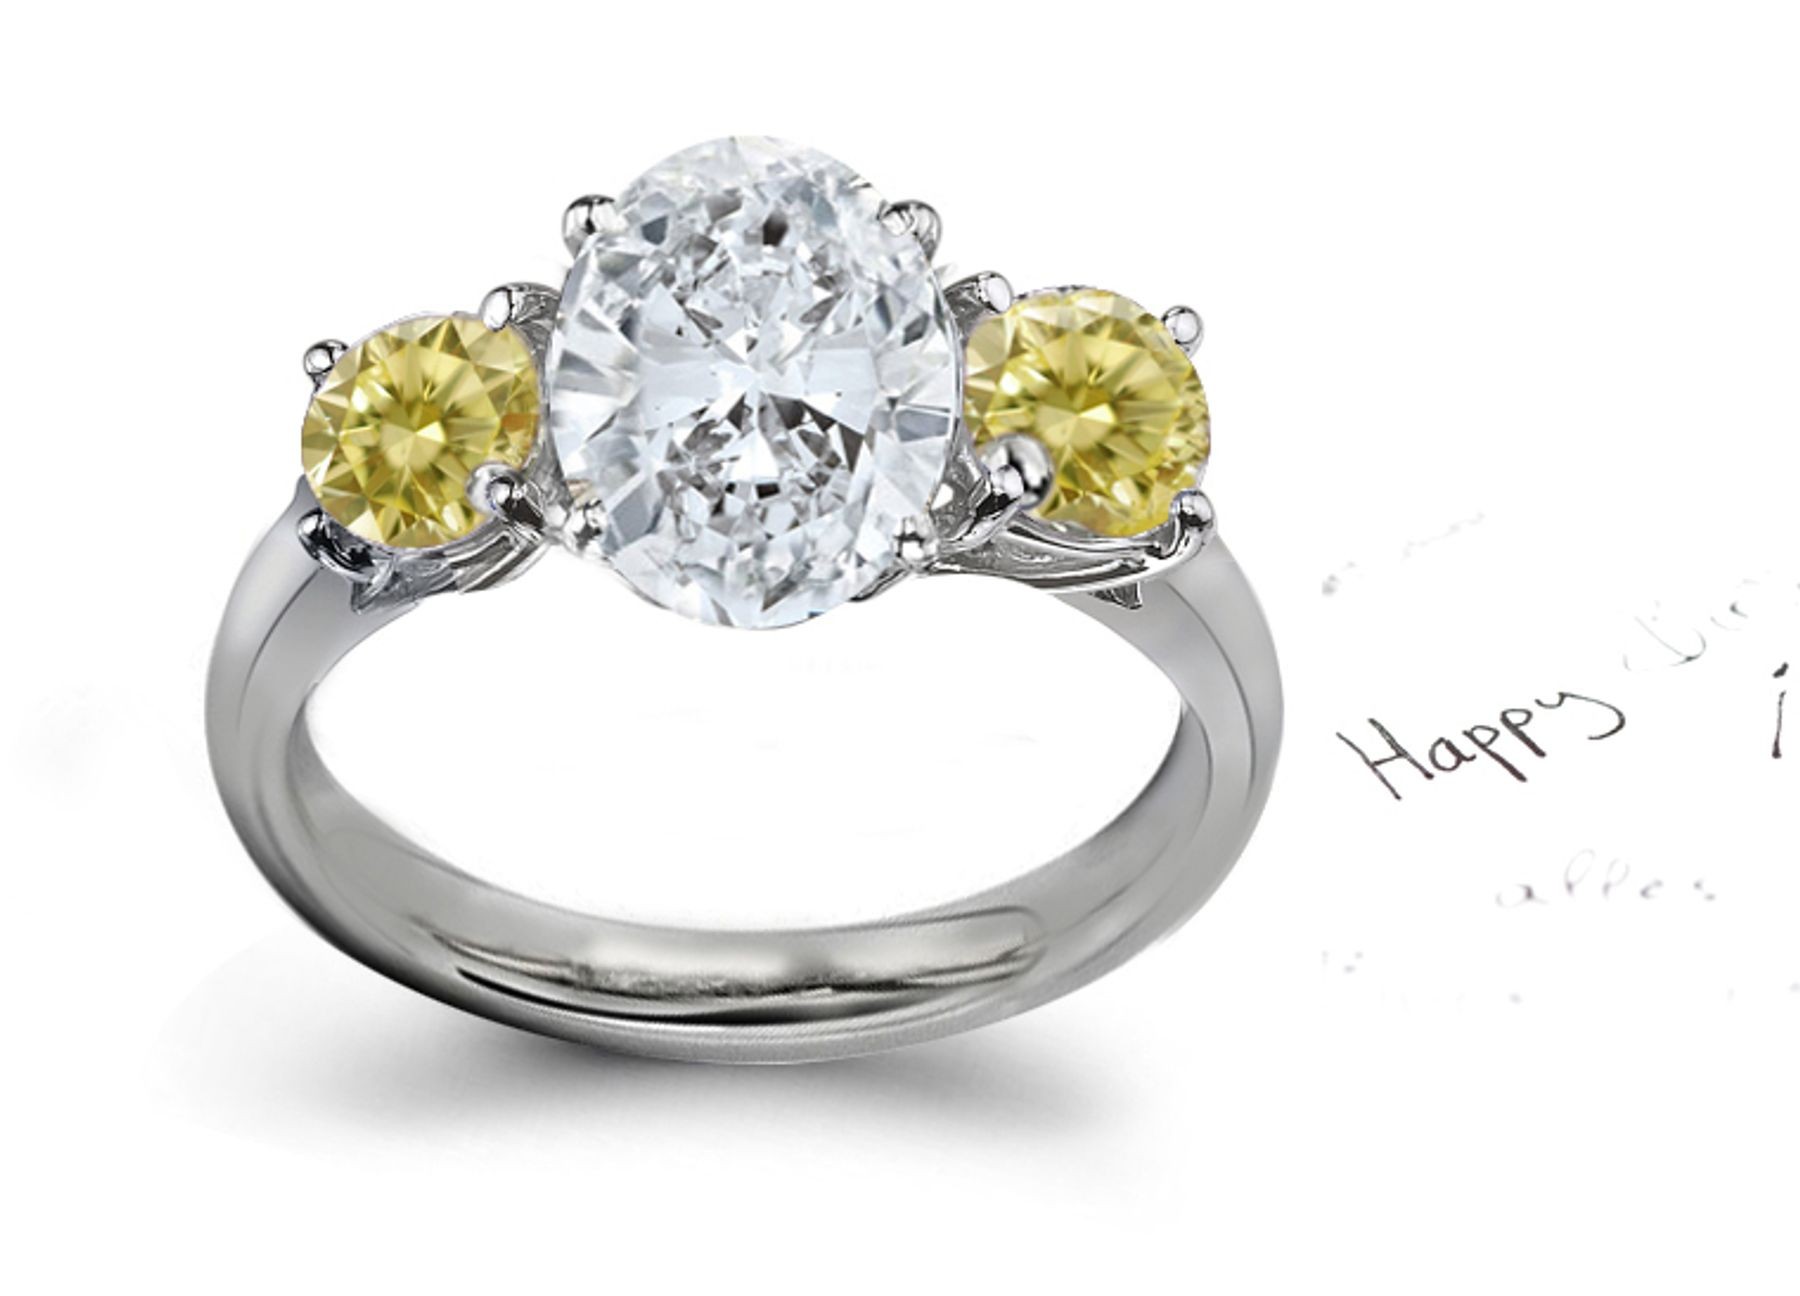 Premier Colored Diamonds Designer Collection - Pink Colored Diamonds & White Diamonds Fancy Pink Diamond Engagement Rings